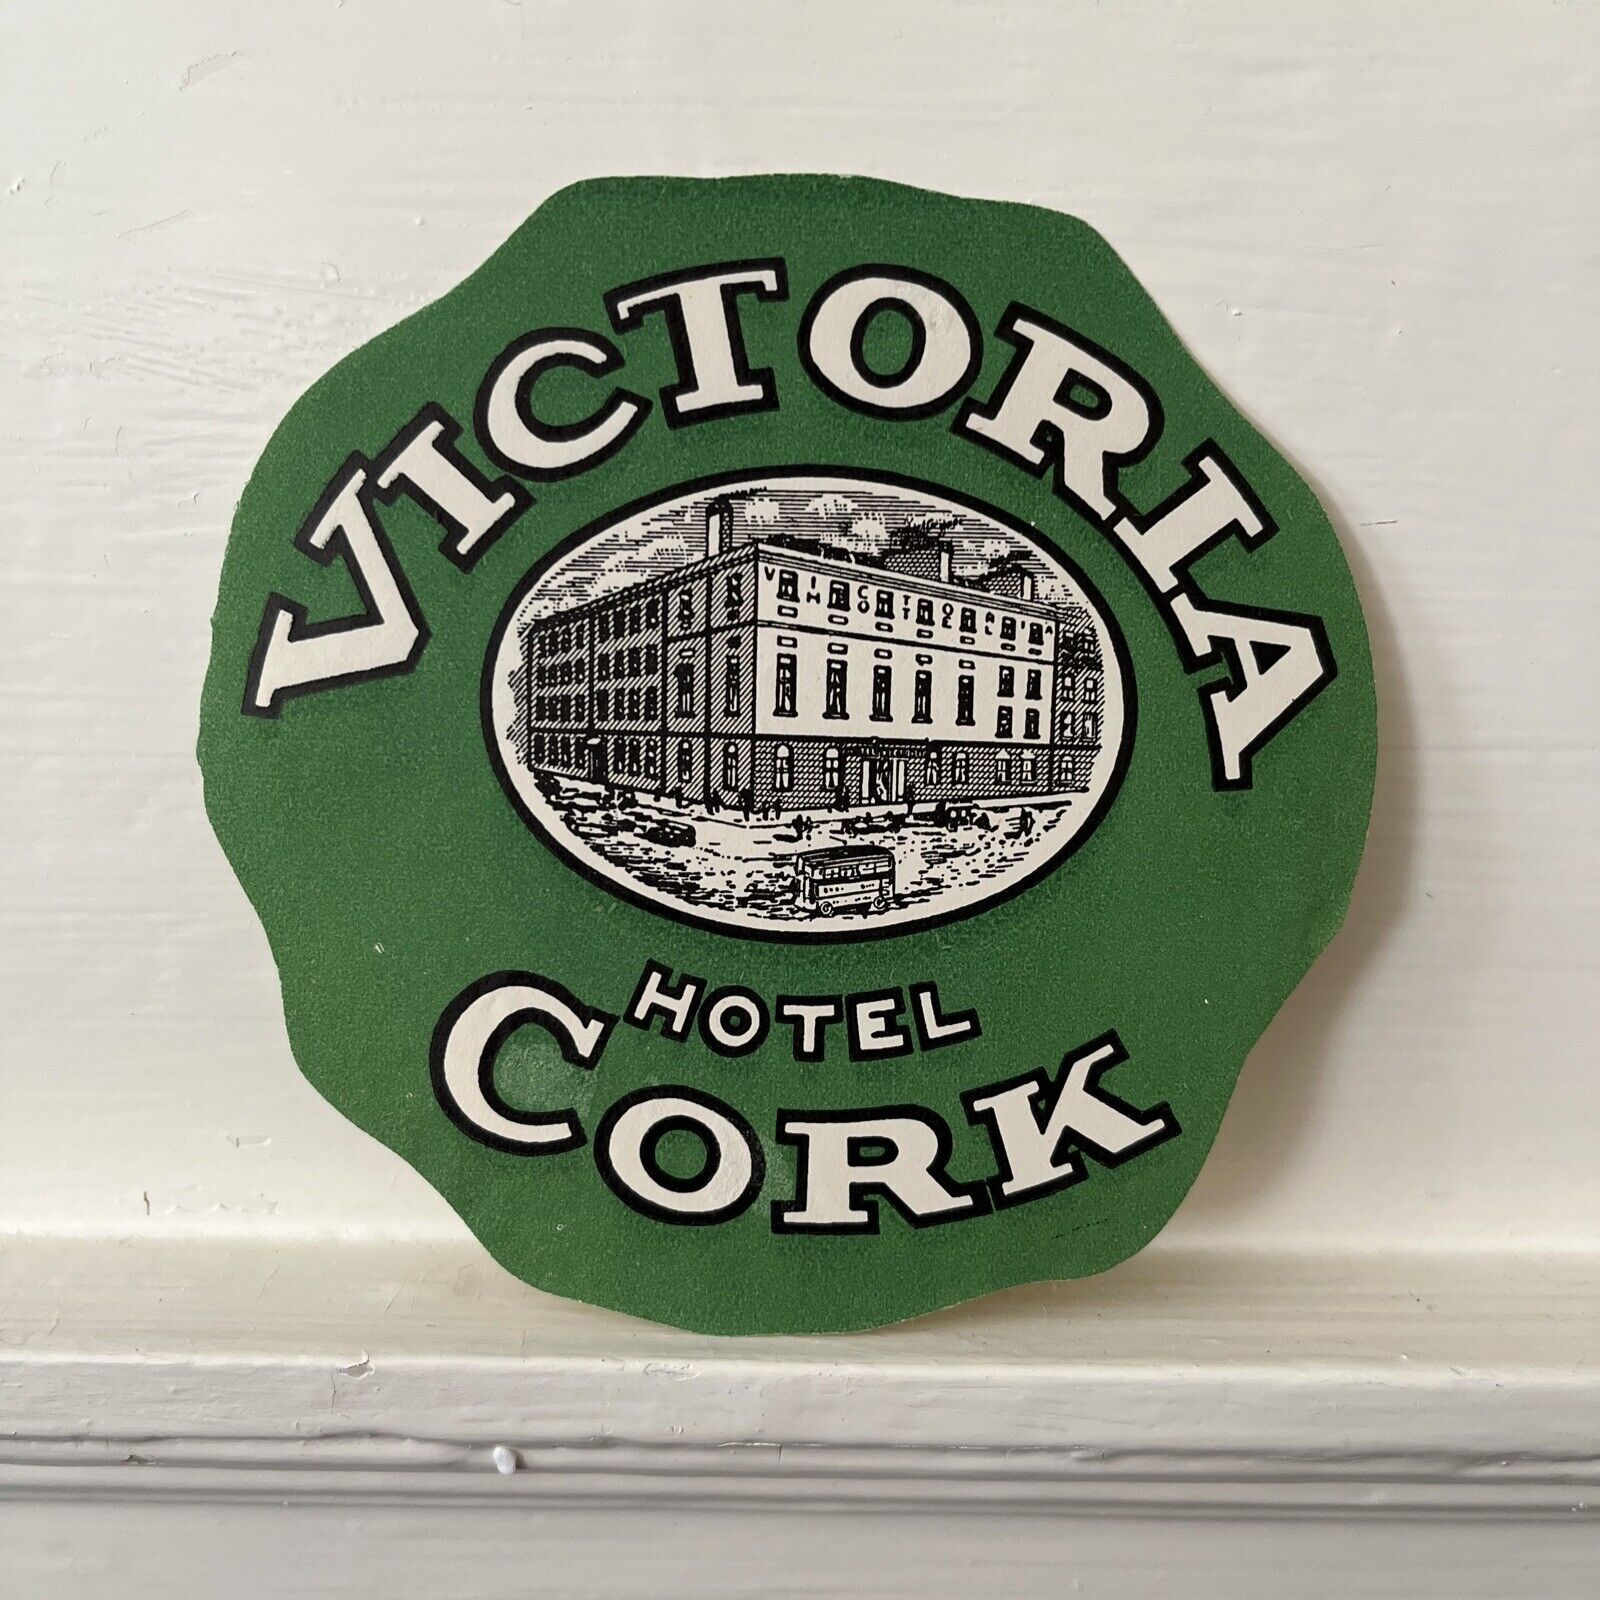 Vtg Antique 1930s Victoria Hotel Cork Ireland Luggage Baggage LABEL Sticker